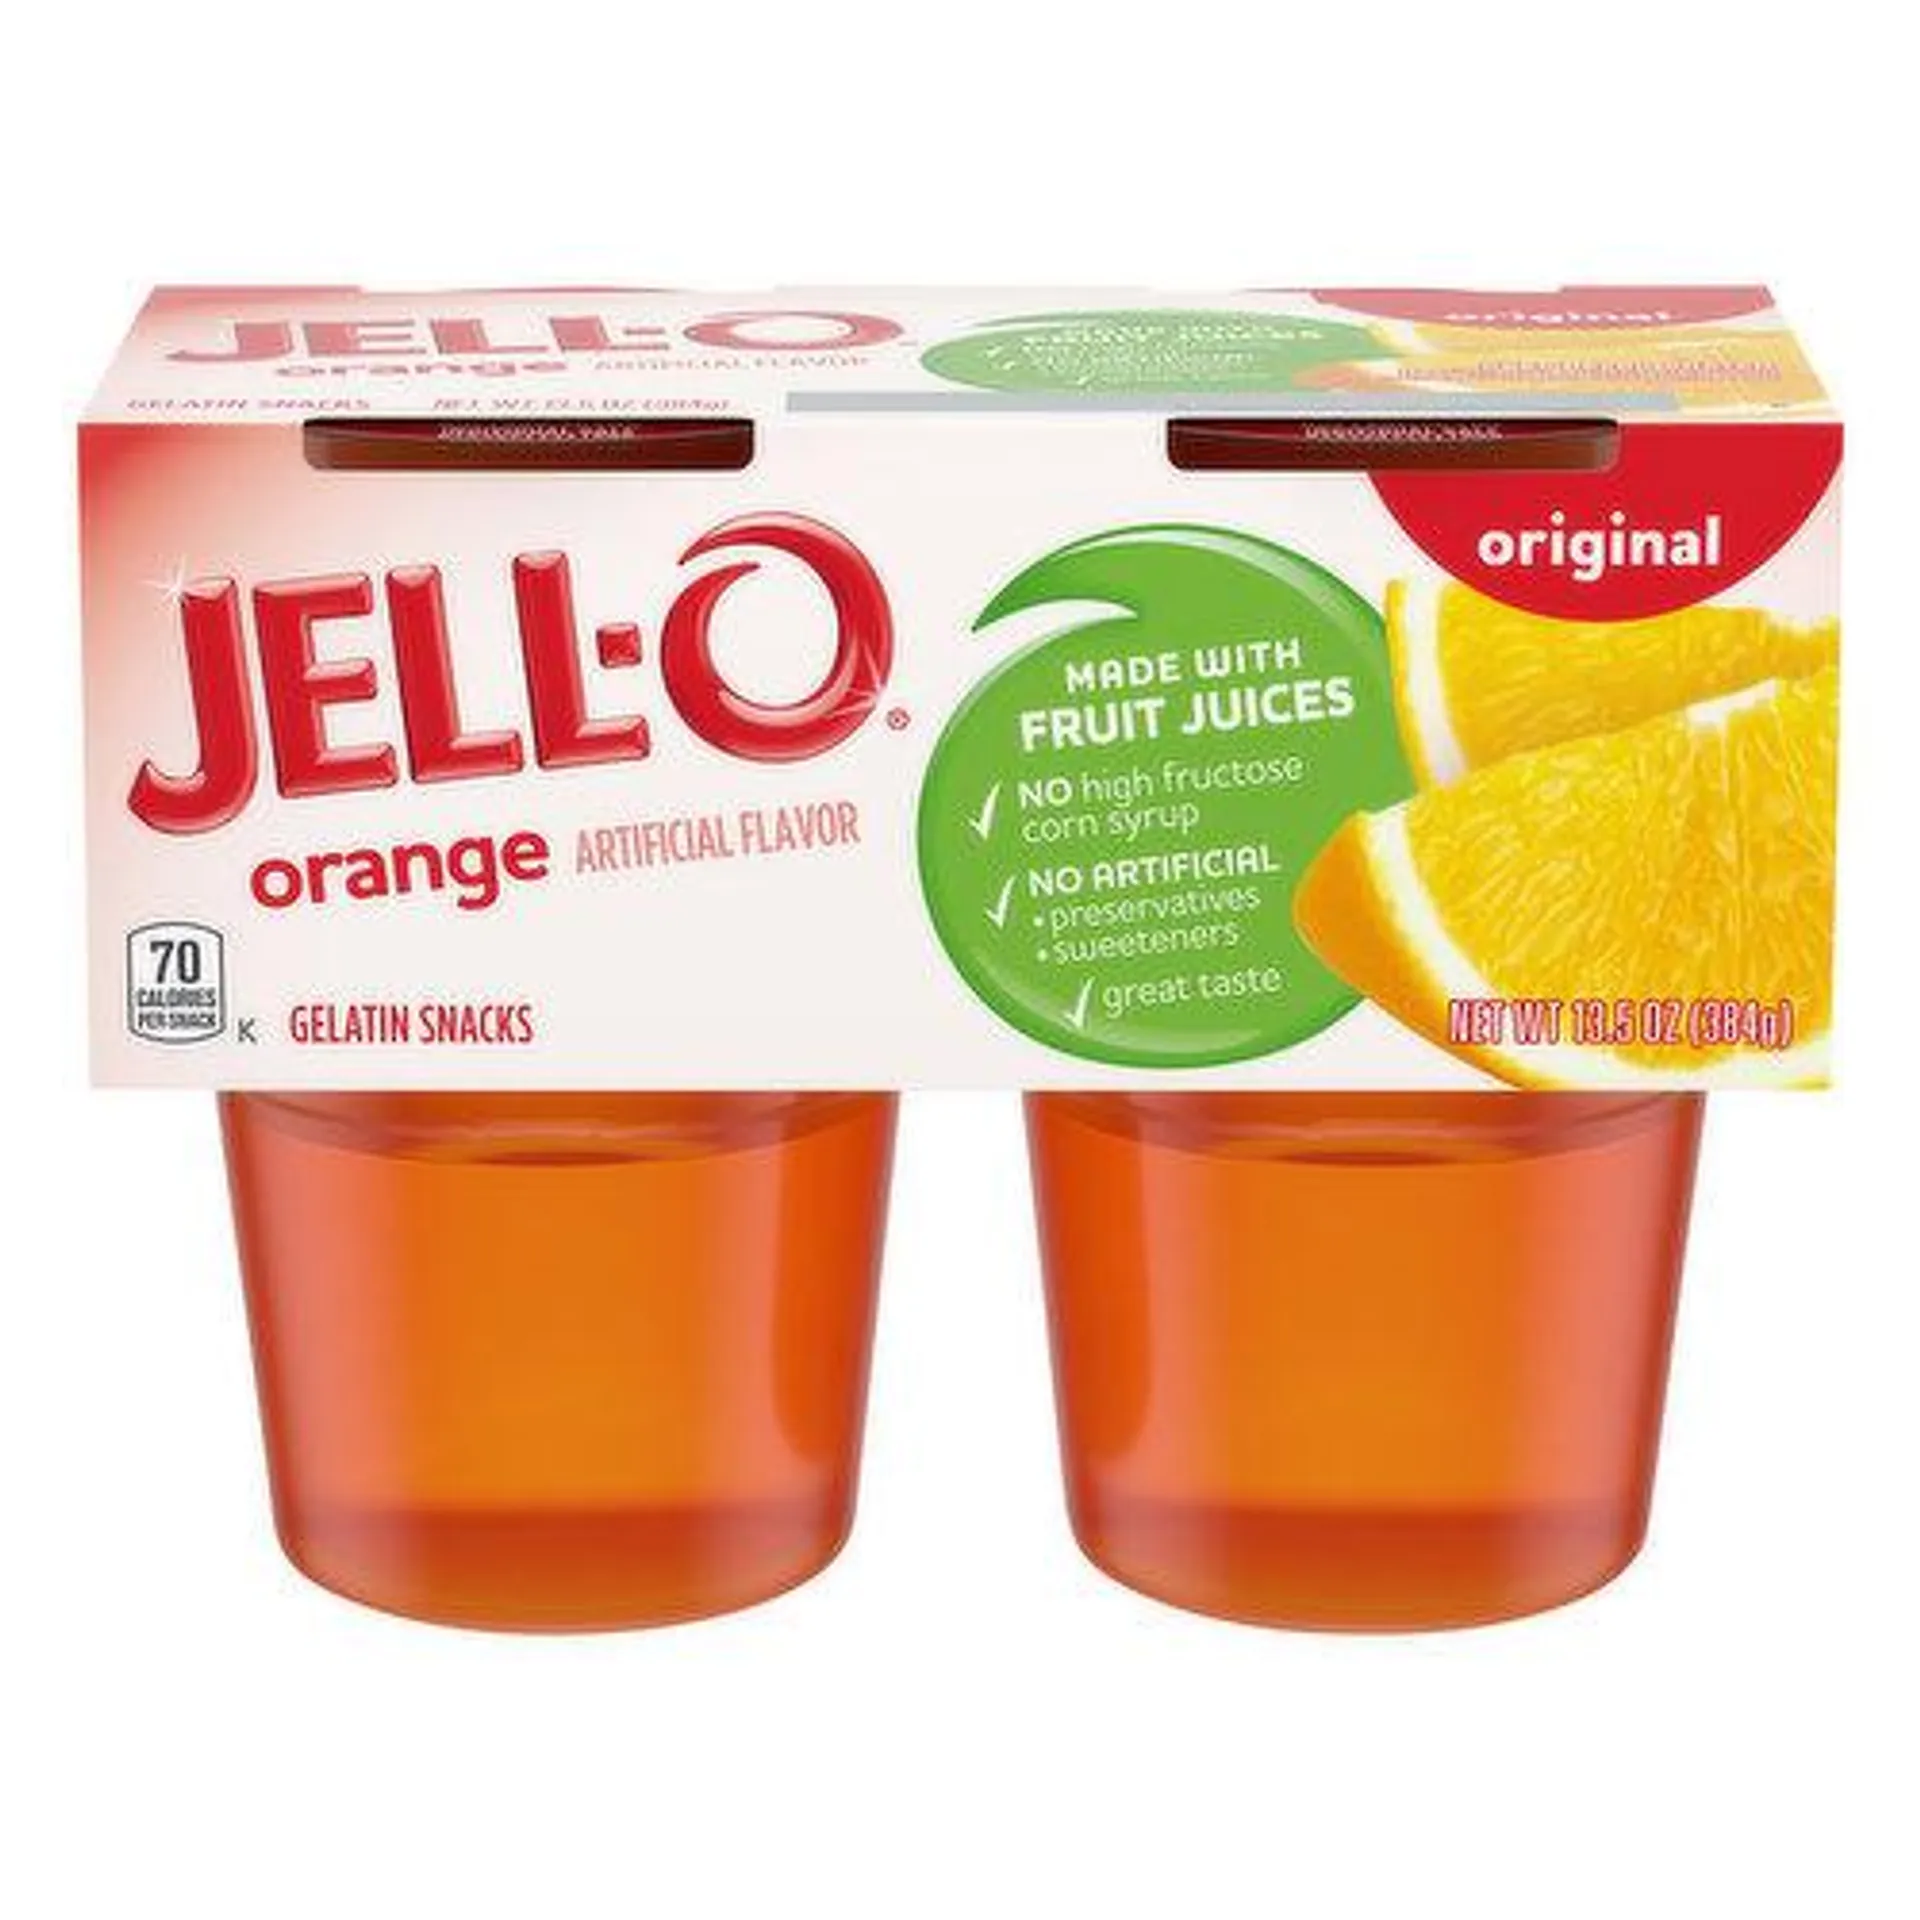 JELL-O Gelatin Snacks, Orange, Original - 13.5 Ounce